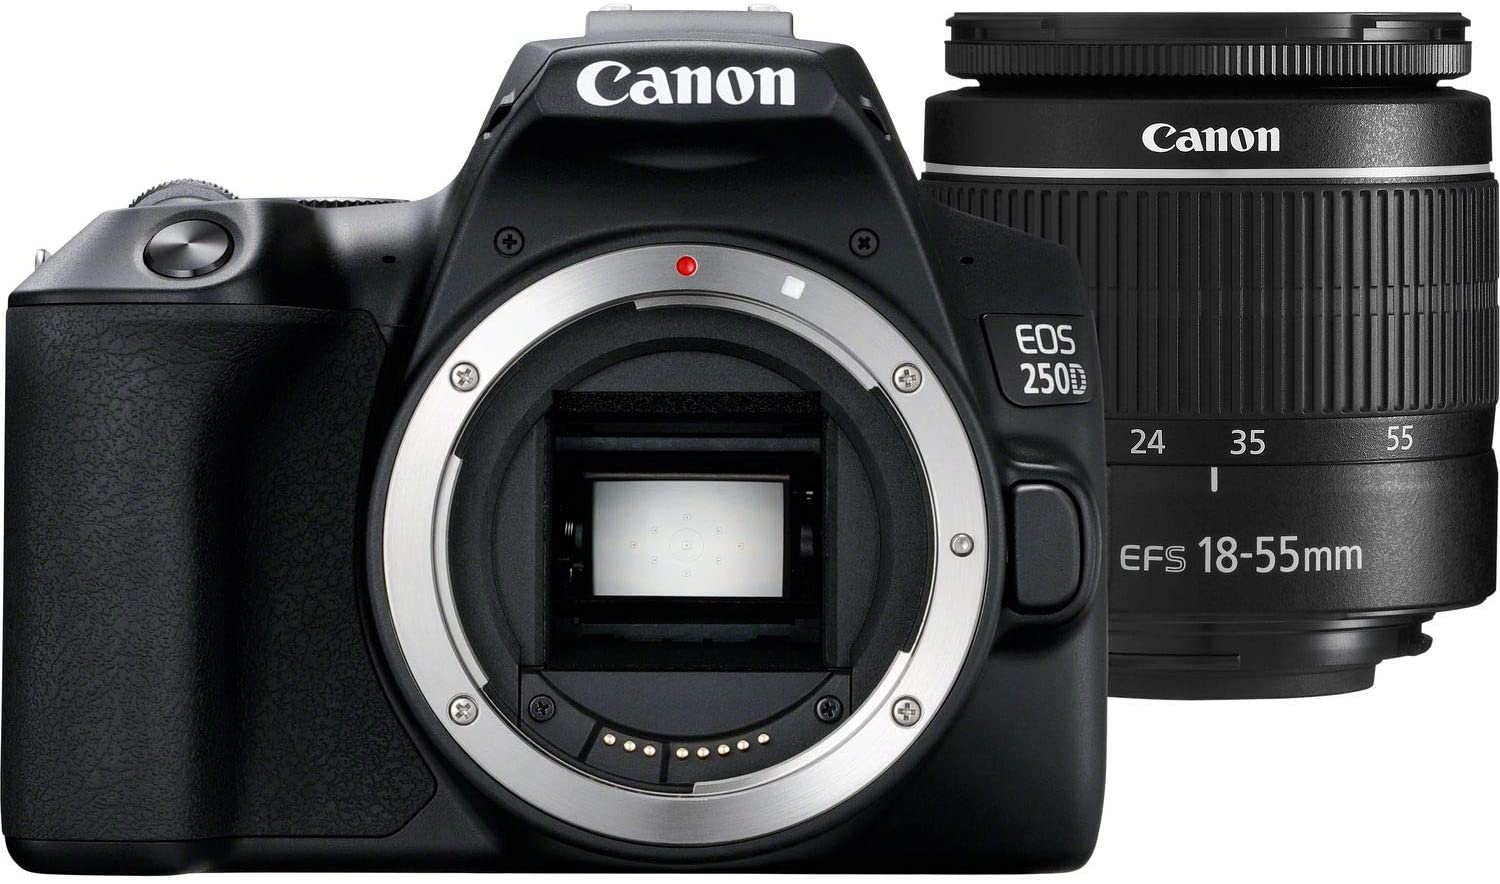 Canon EOS 250D / Rebel SL3 DSLR Camera with 18-55mm Lens (Black) + Creative Filter Set, EOS Camera Bag + Sandisk Ultra 64GB Card + 6AVE Electronics